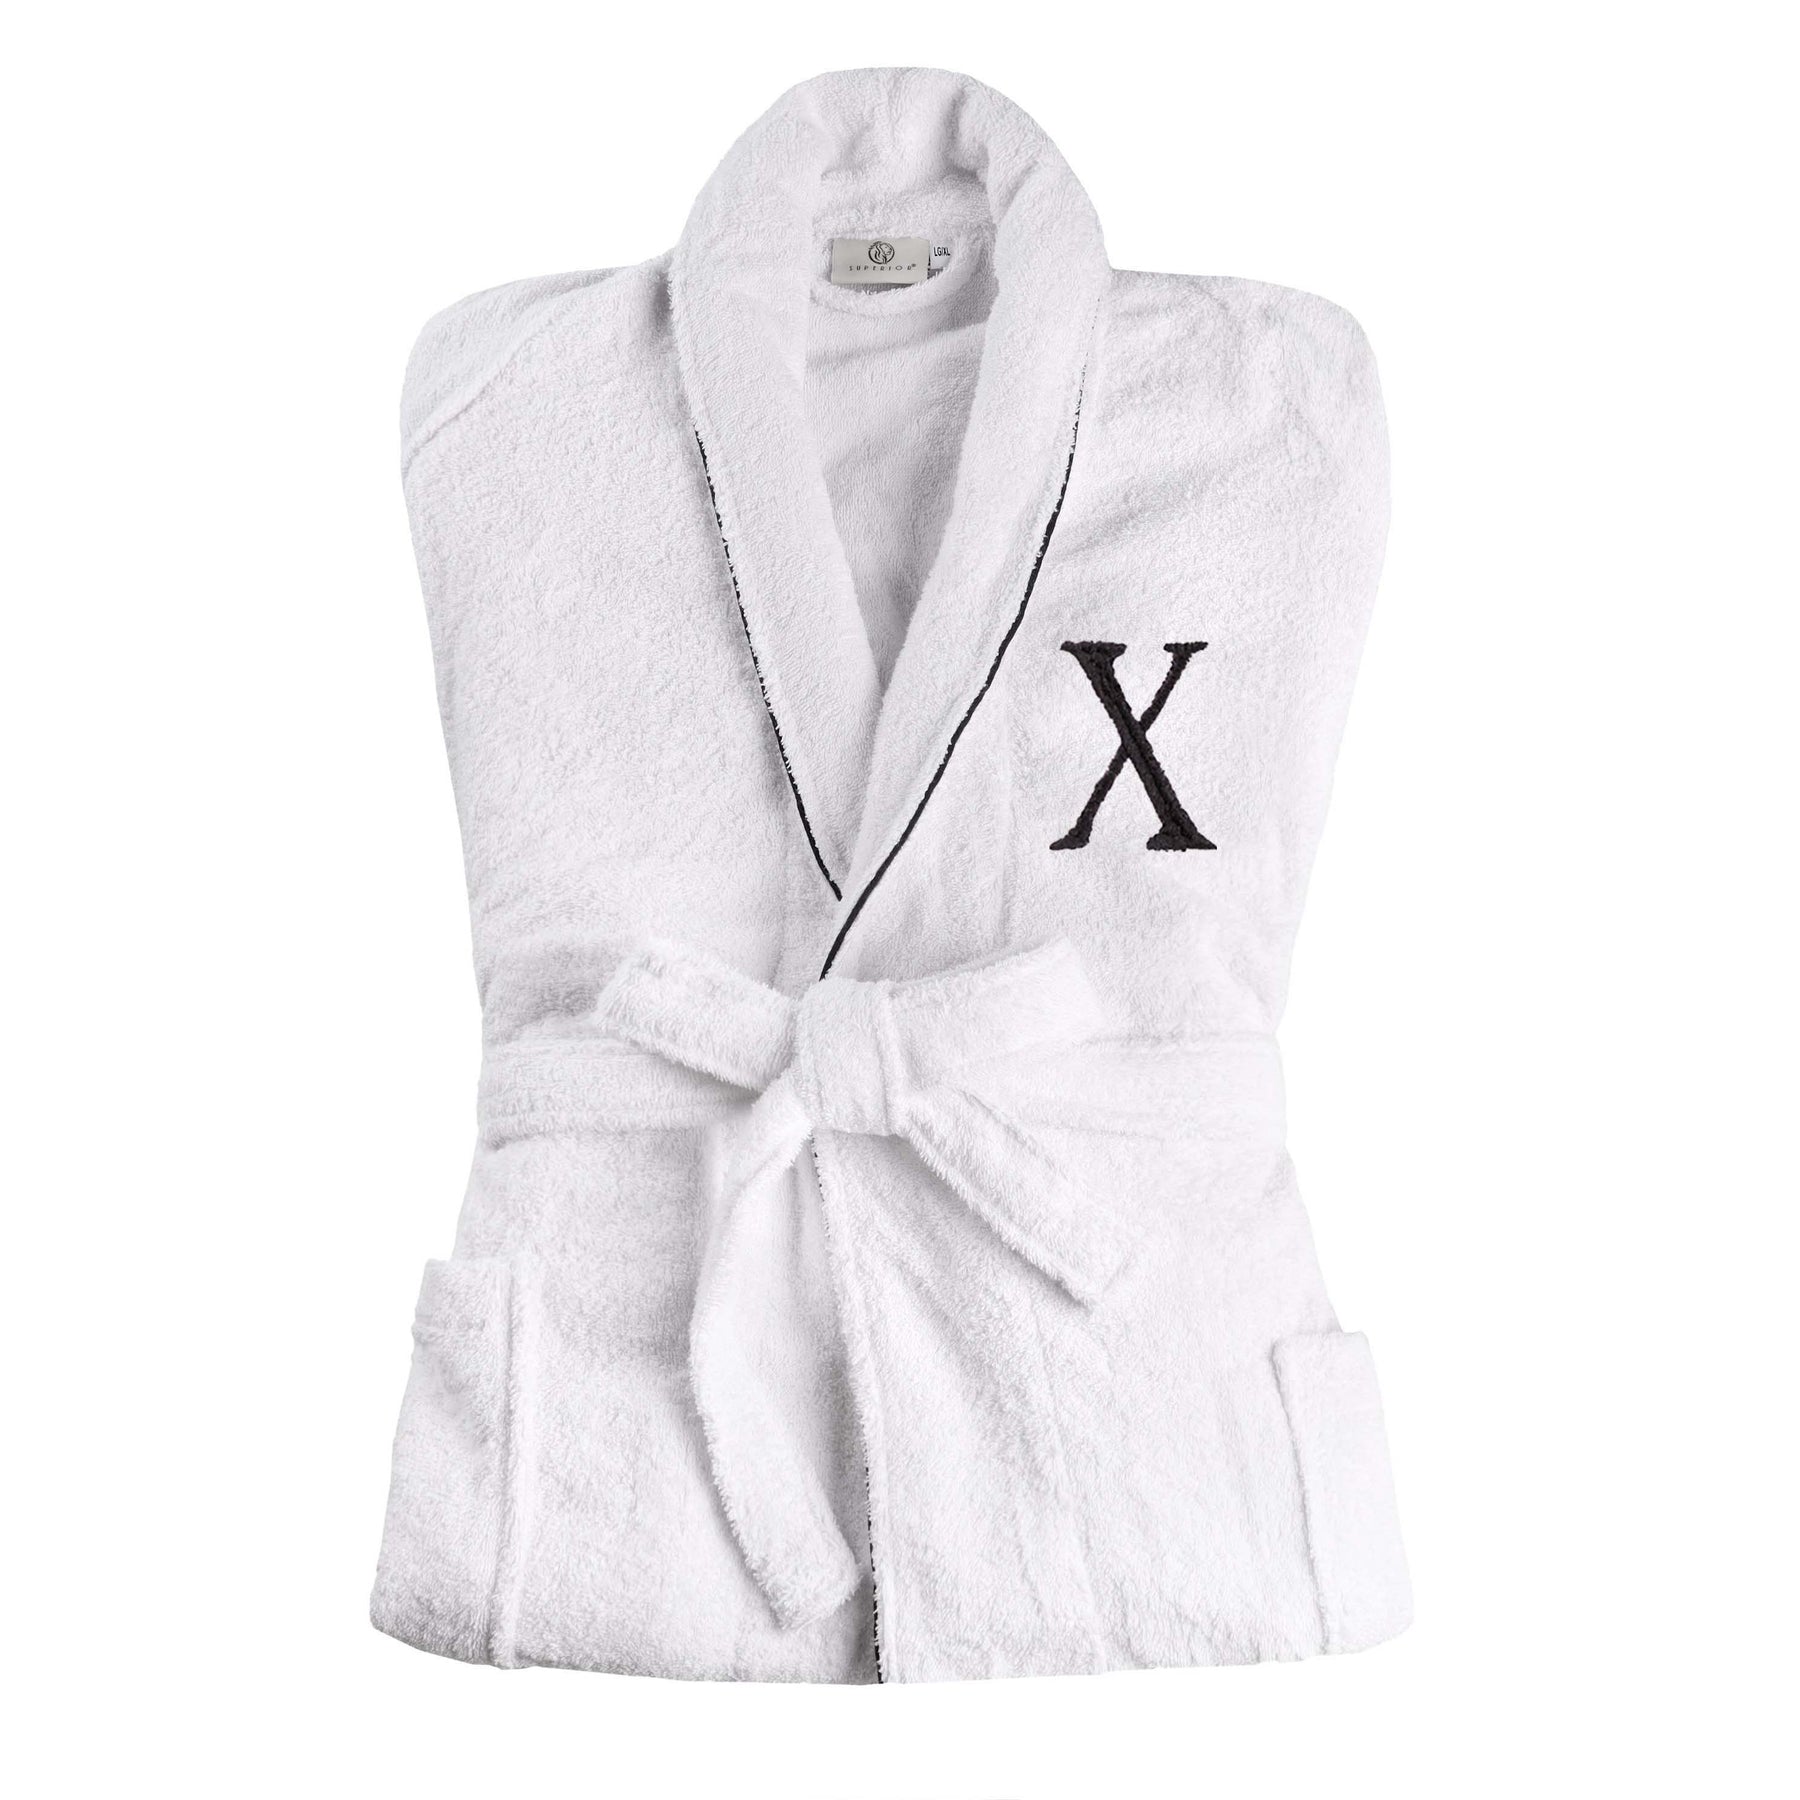 Cotton Adult Unisex Embroidered Fluffy Bathrobe White - Letter X